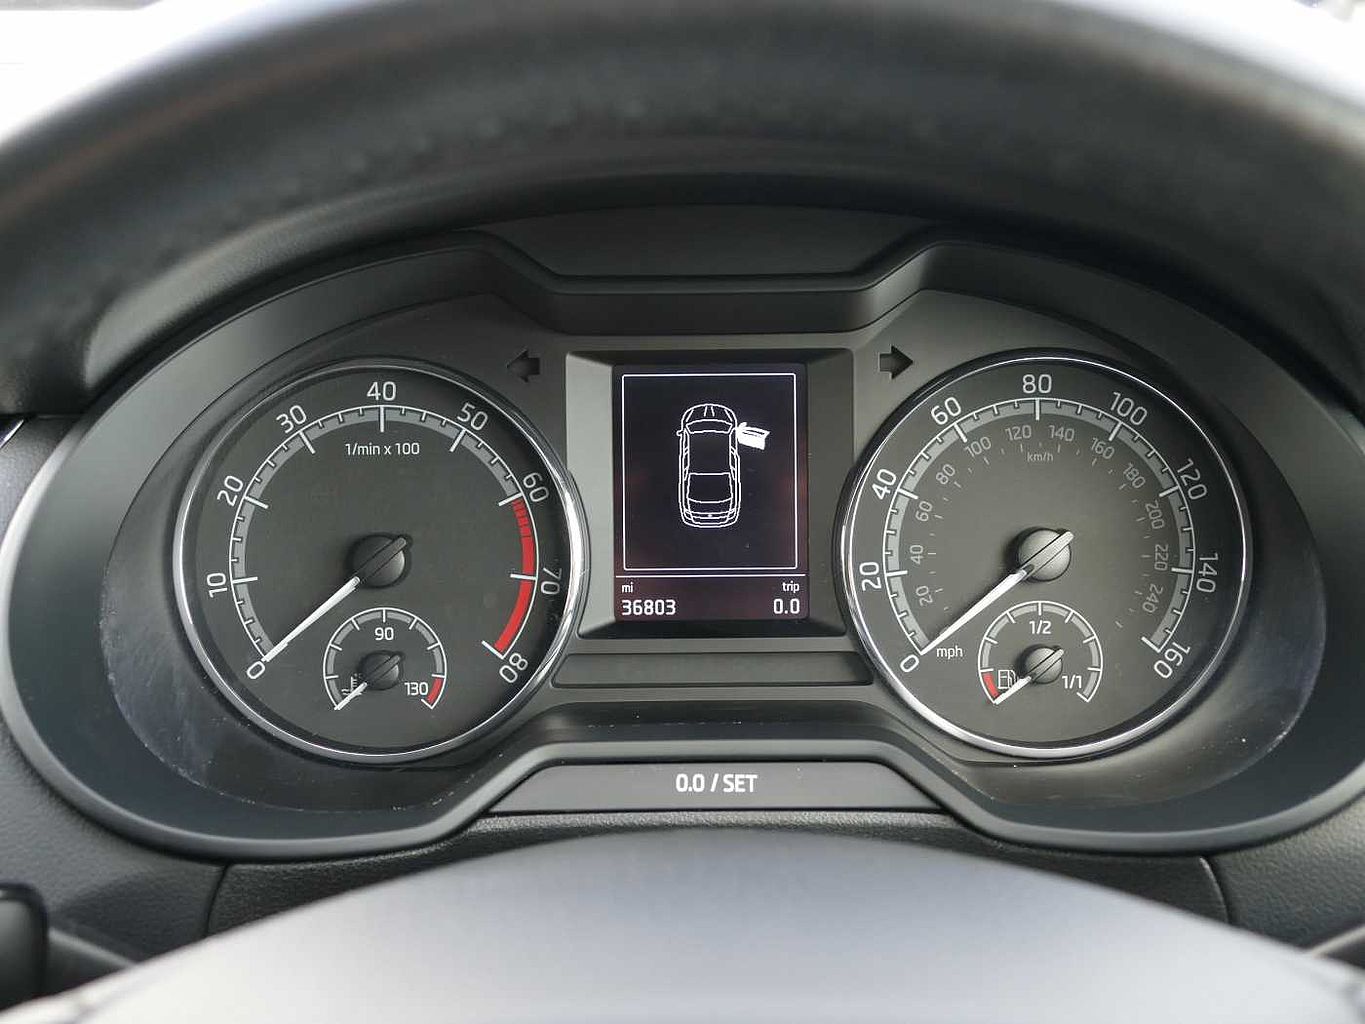 SKODA Octavia 1.0 TSI (115ps) SE Auto/DSG Hatchback